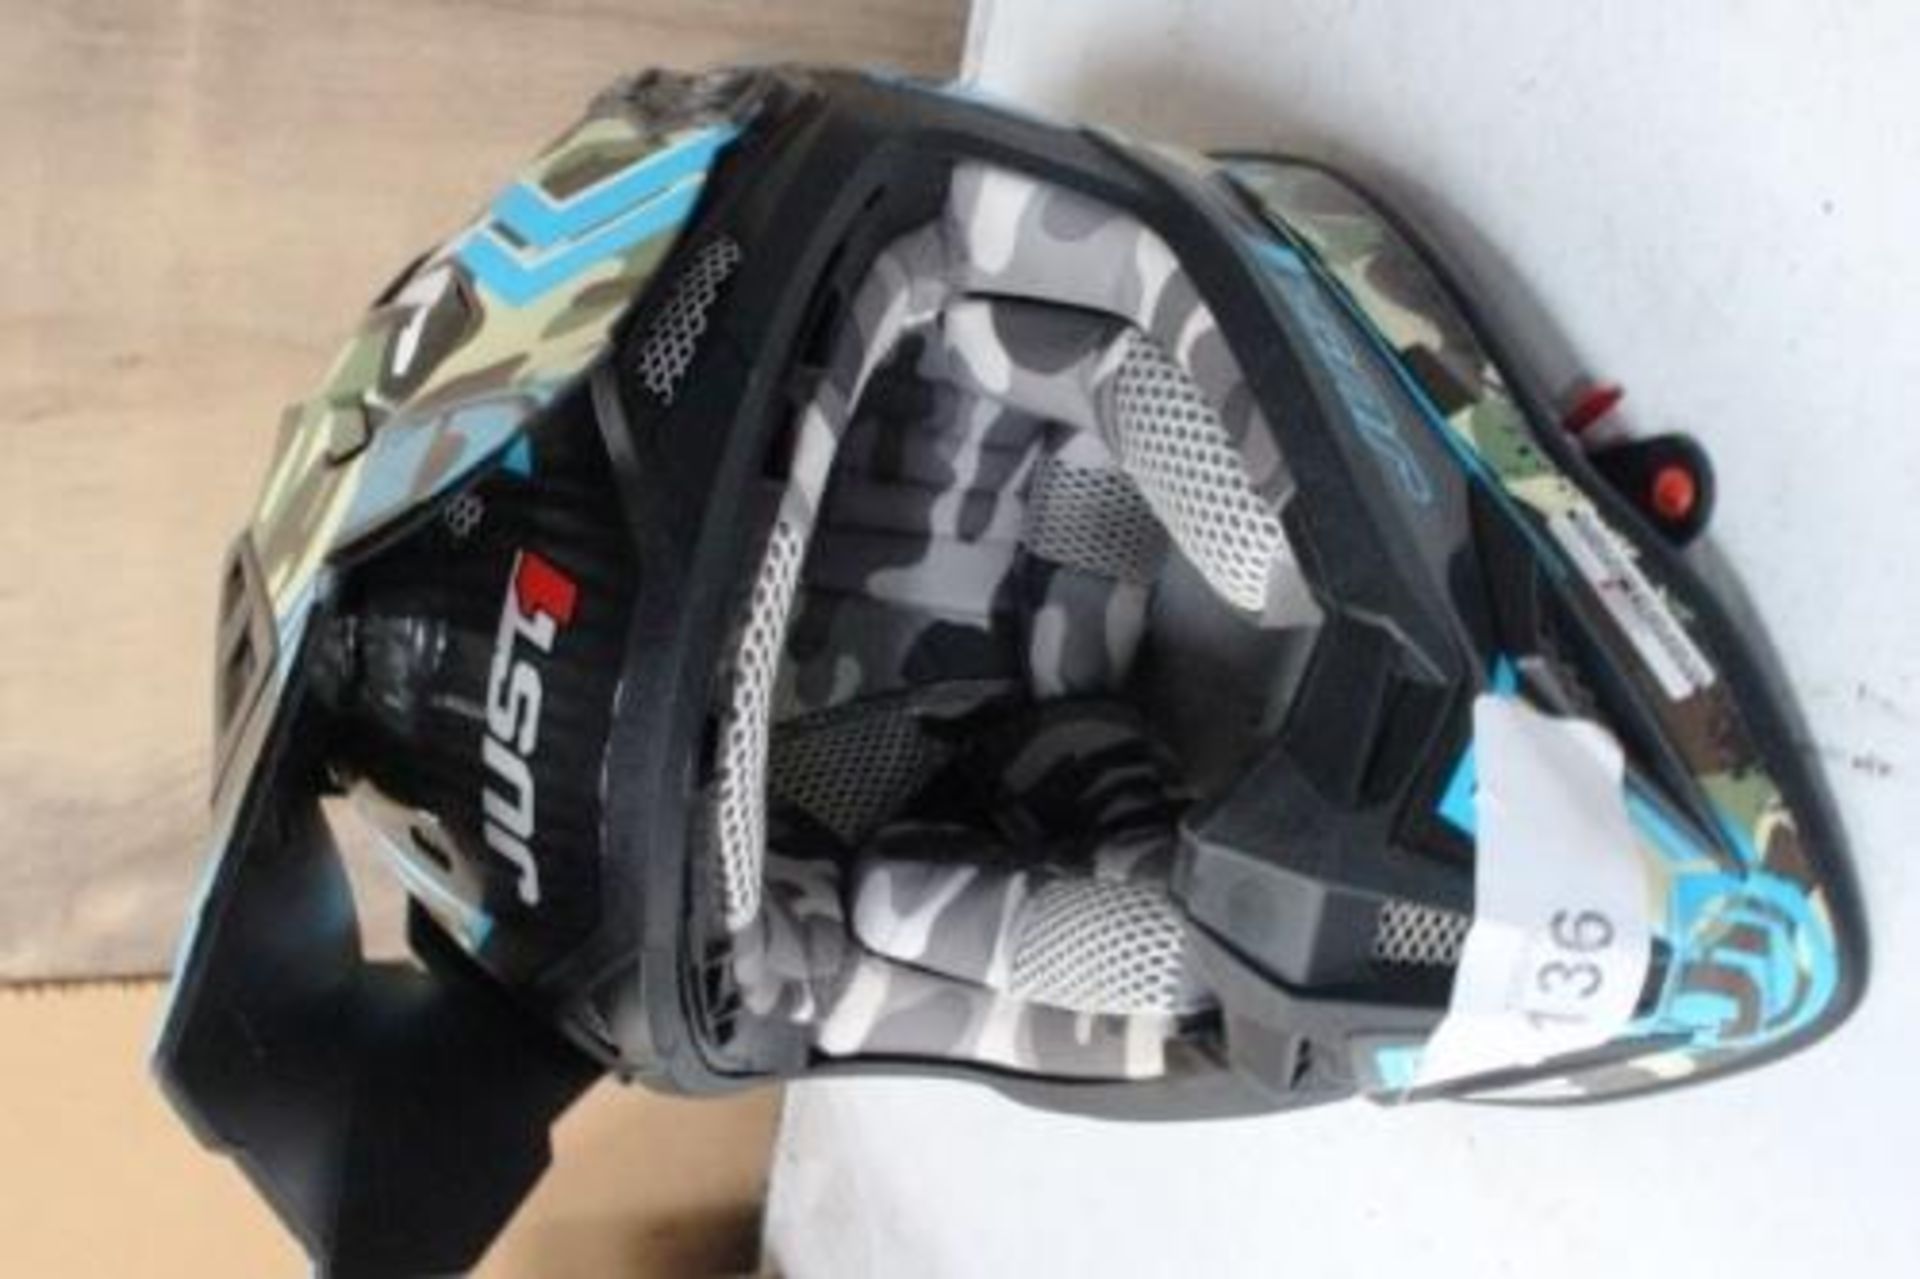 1 x second hand Just1 J12 full carbon fibre motor X helmet, colour camo/blue, size M, weight 58g,